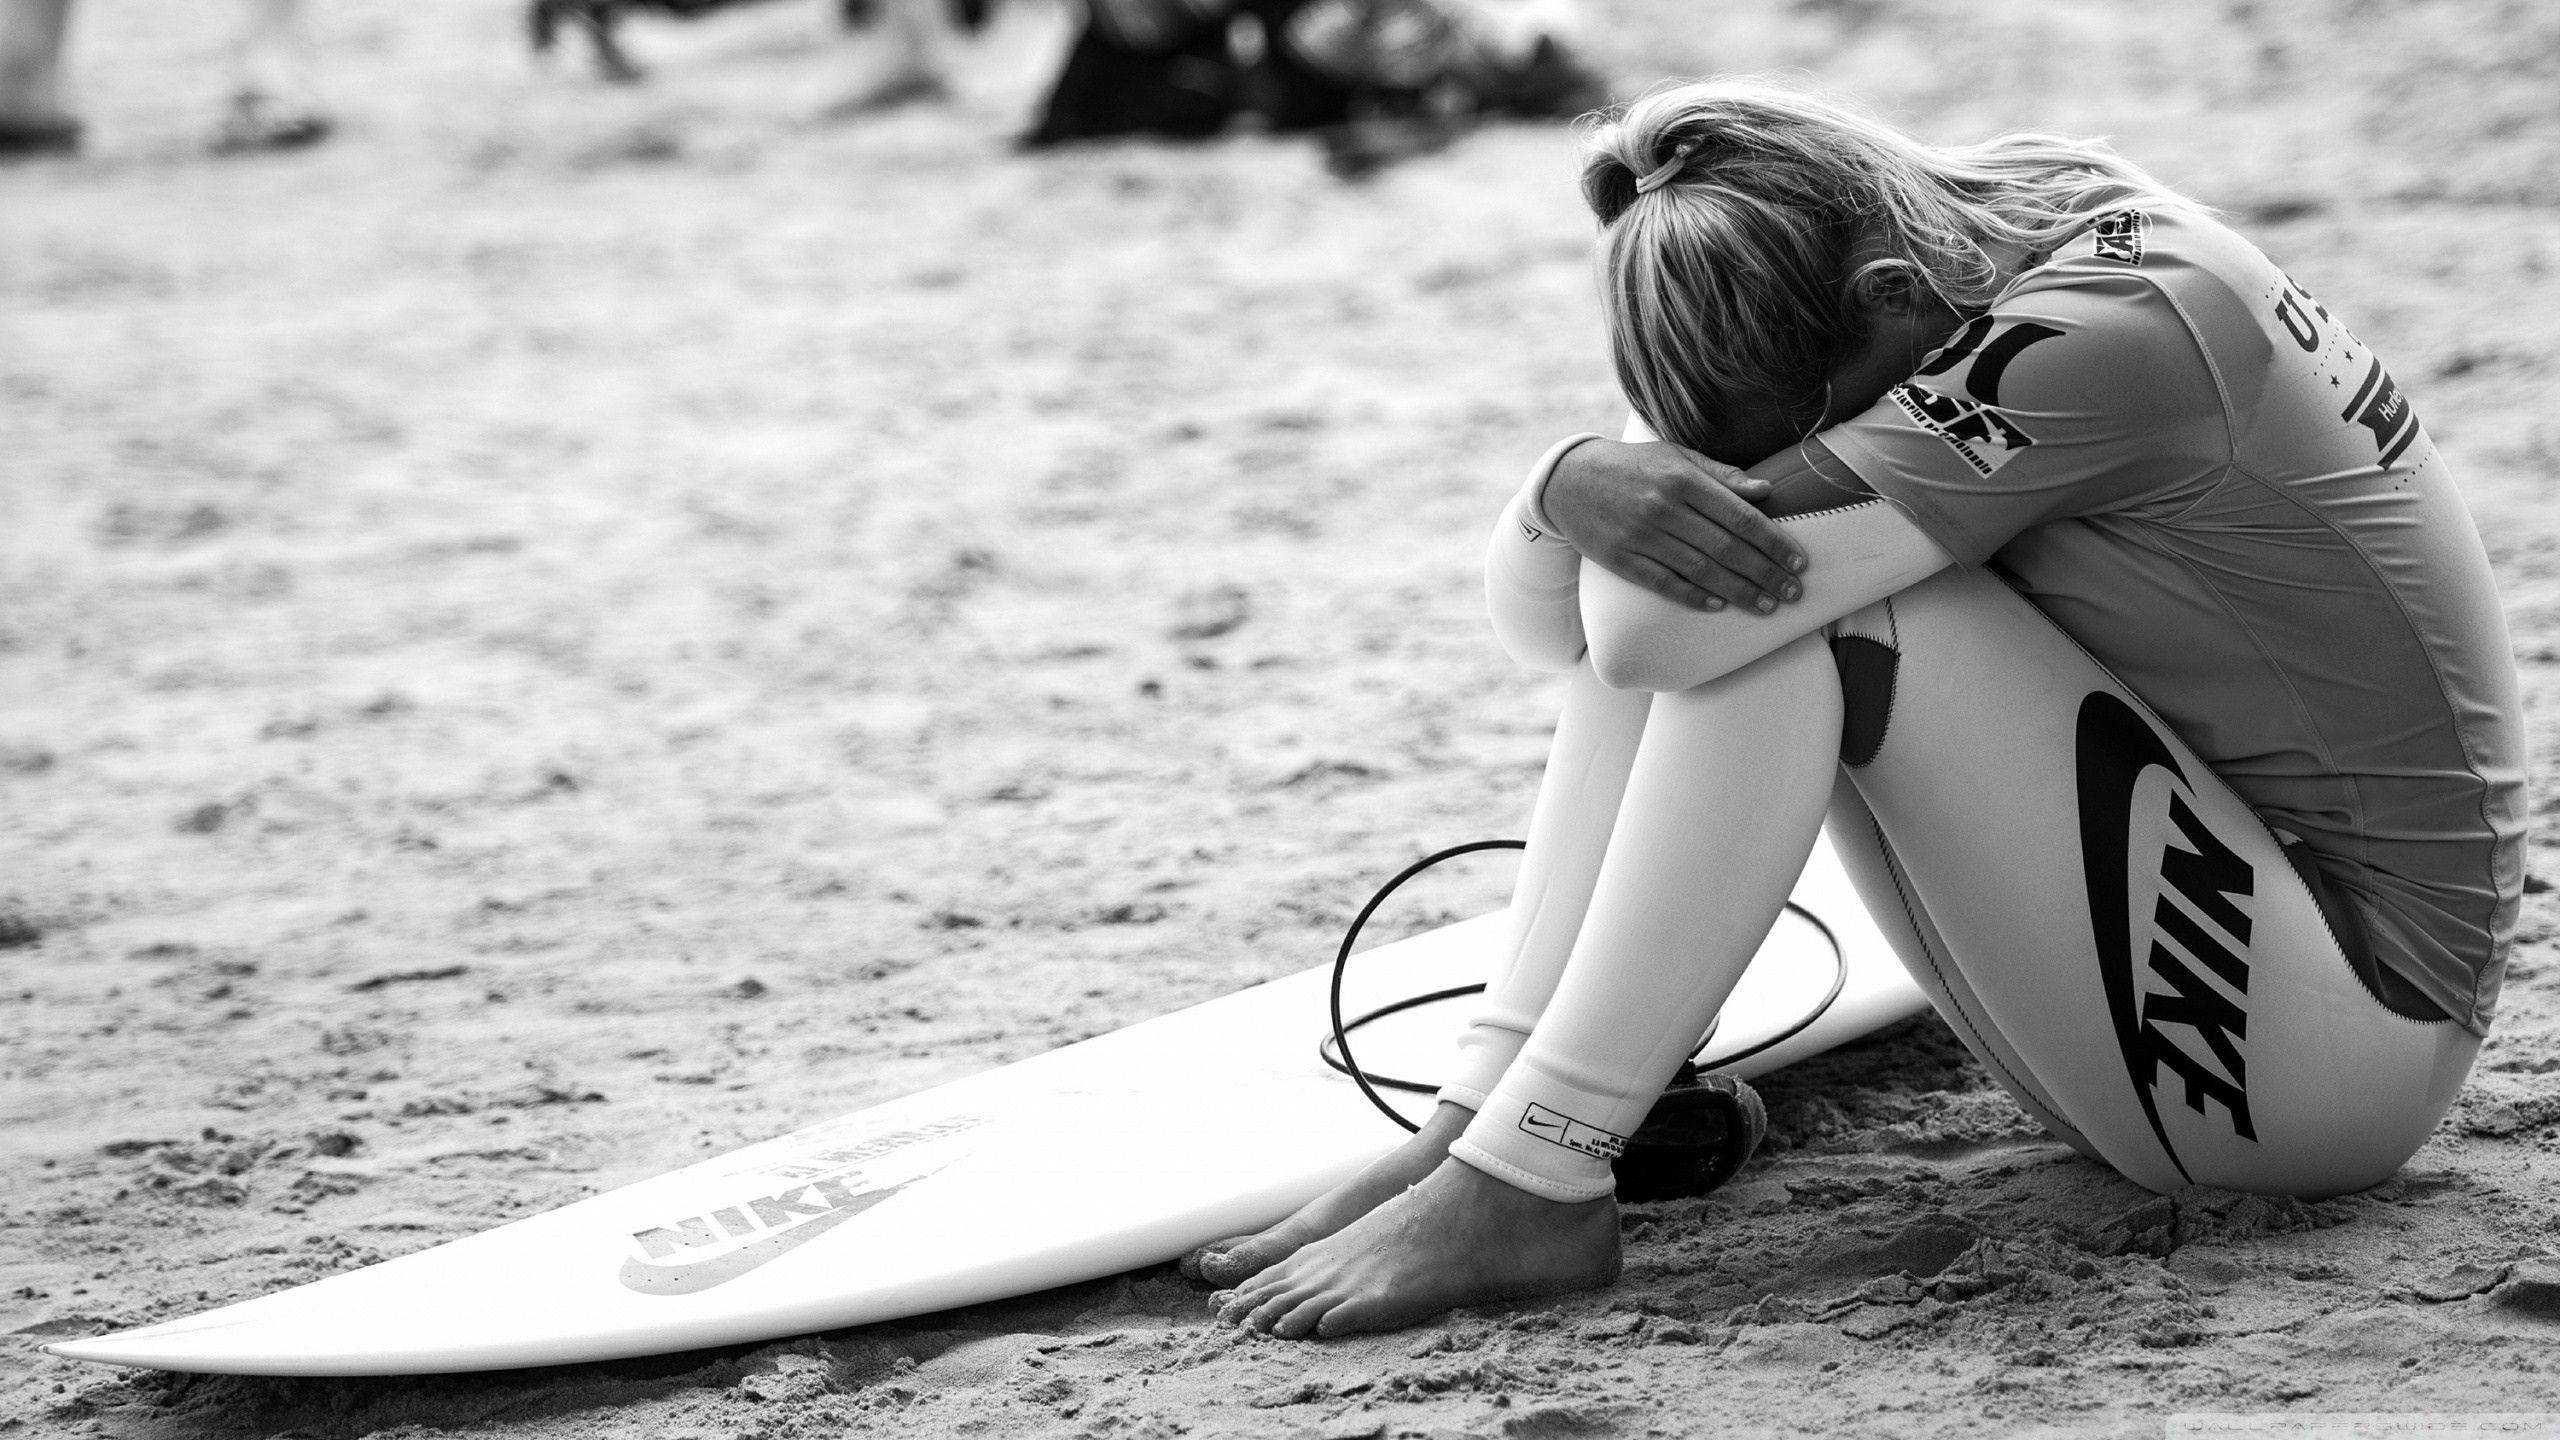 Surfing: Monochrome short boarding woman athlete, 2020 Summer Olympics. 2560x1440 HD Background.